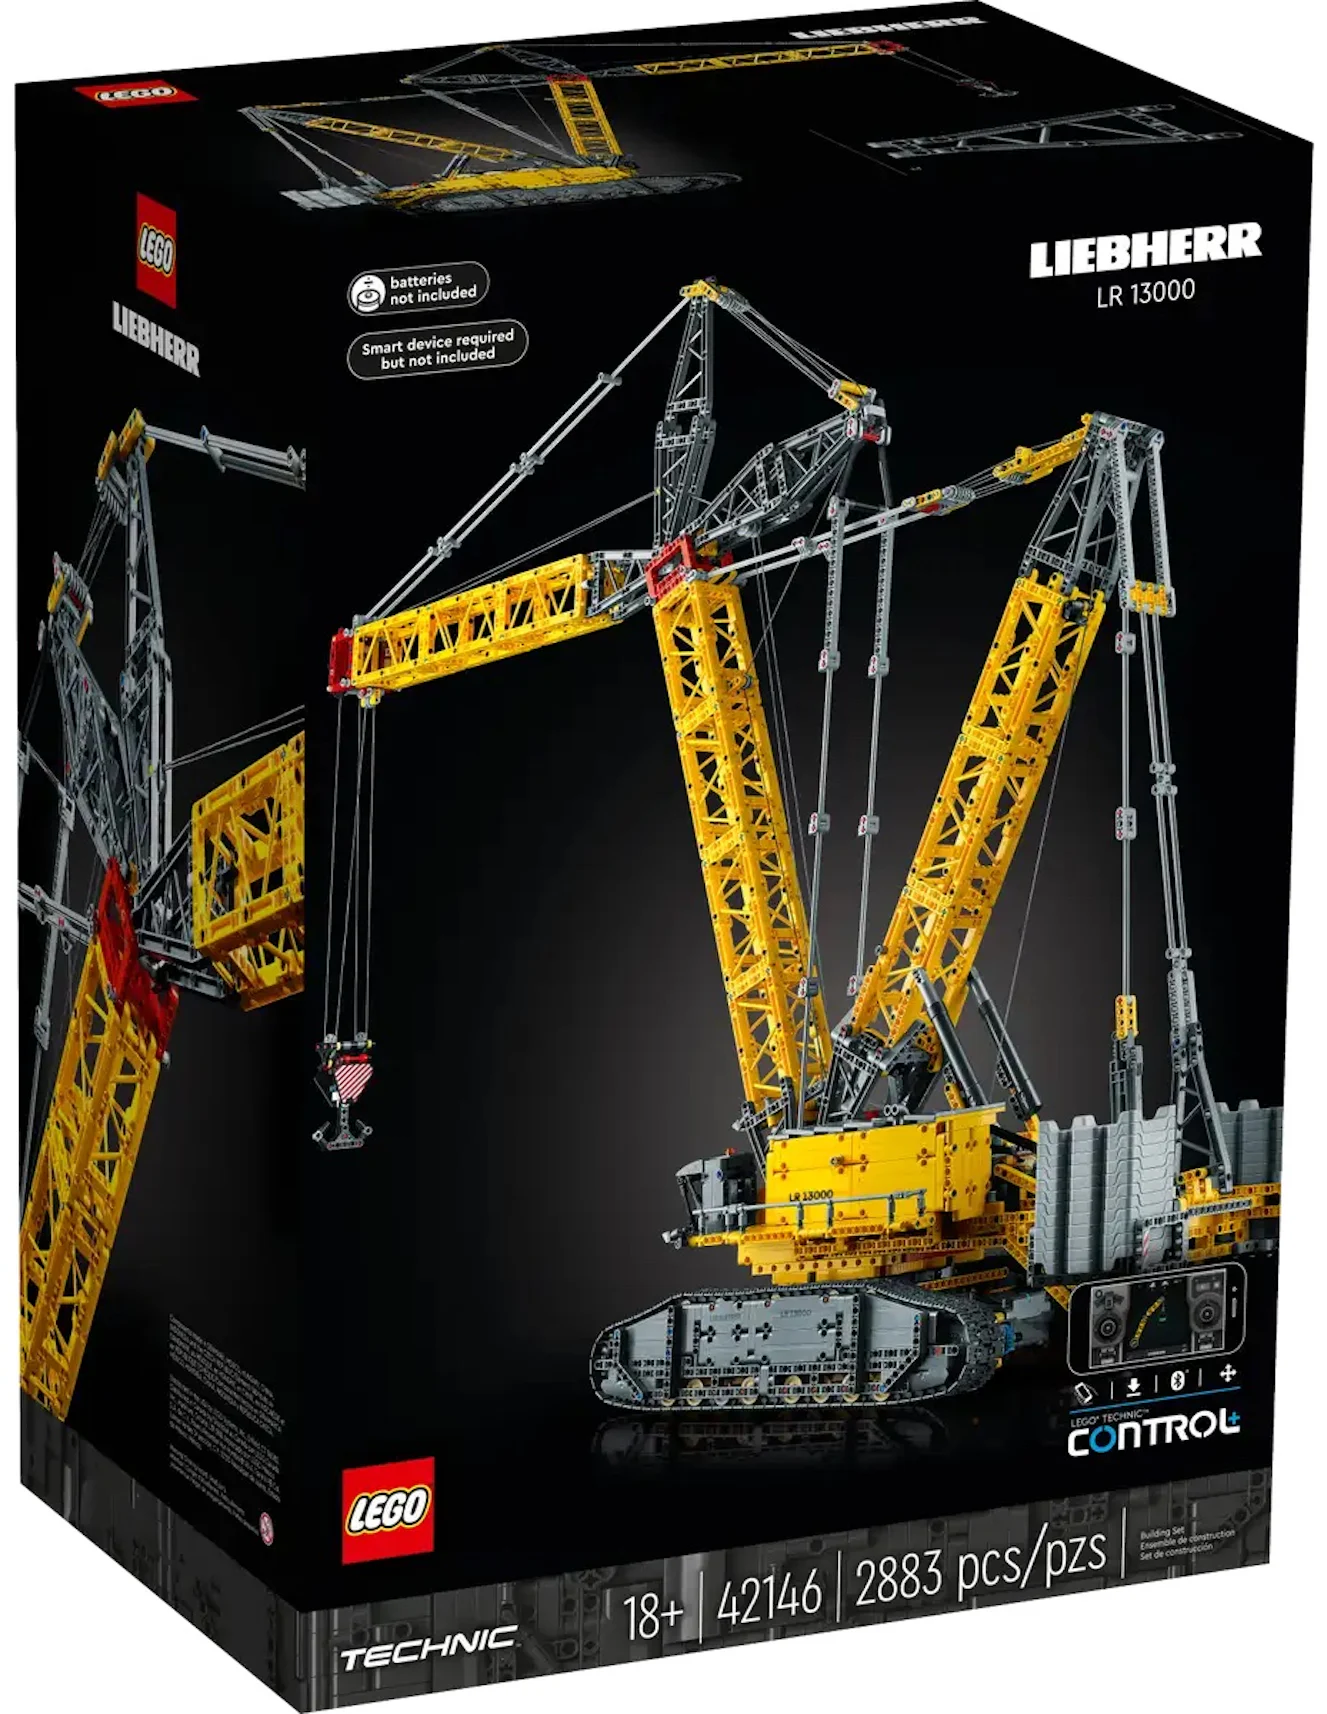 LEGO Technic Liebherr Crawler Crane LR 13000 Set 42146